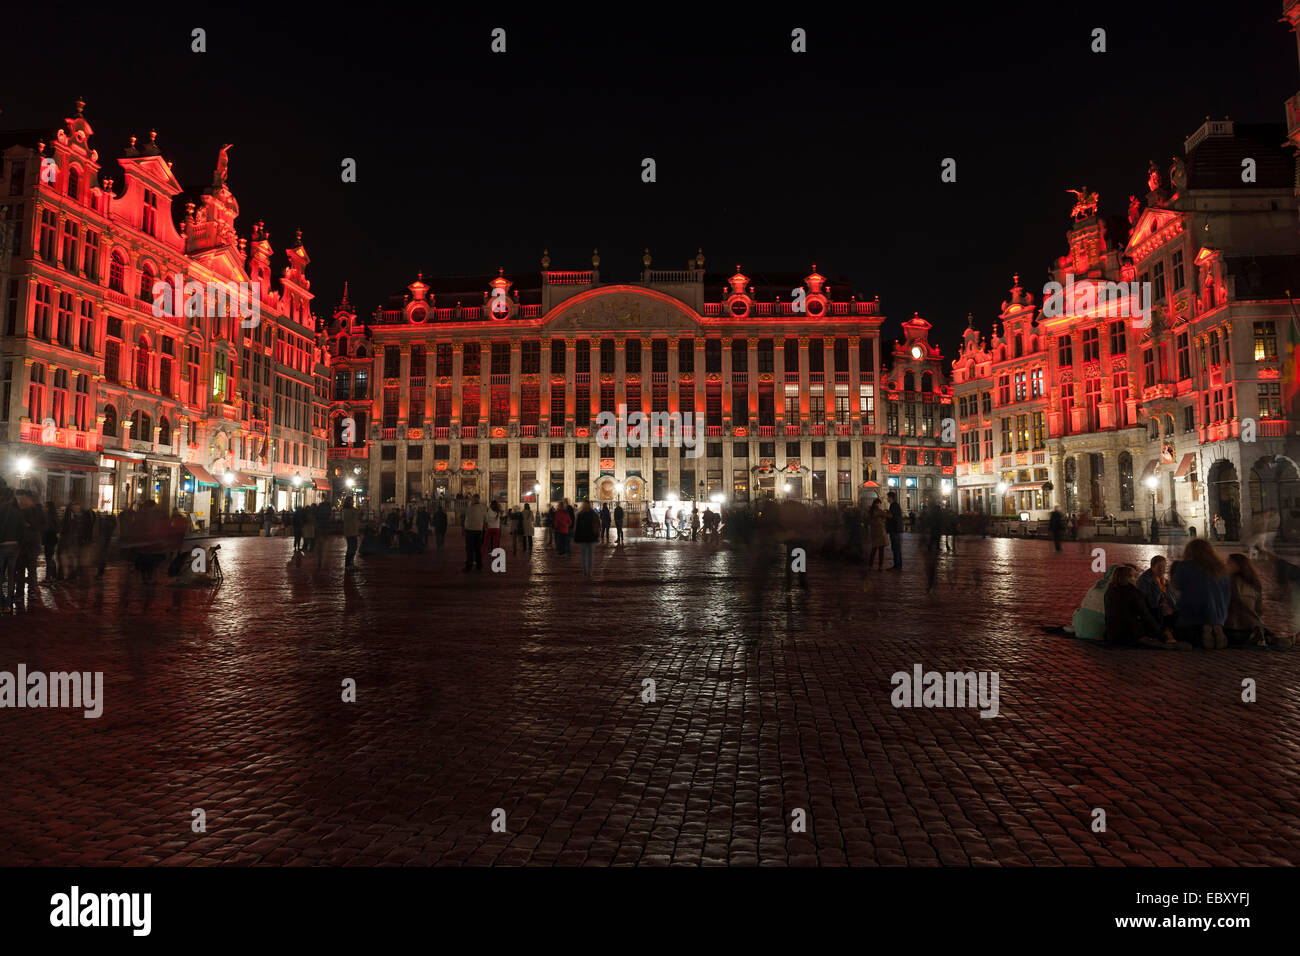 Grote Markt, Grand Place market square, illuminated at night, Brussels, Brussels Region, Belgium Stock Photo